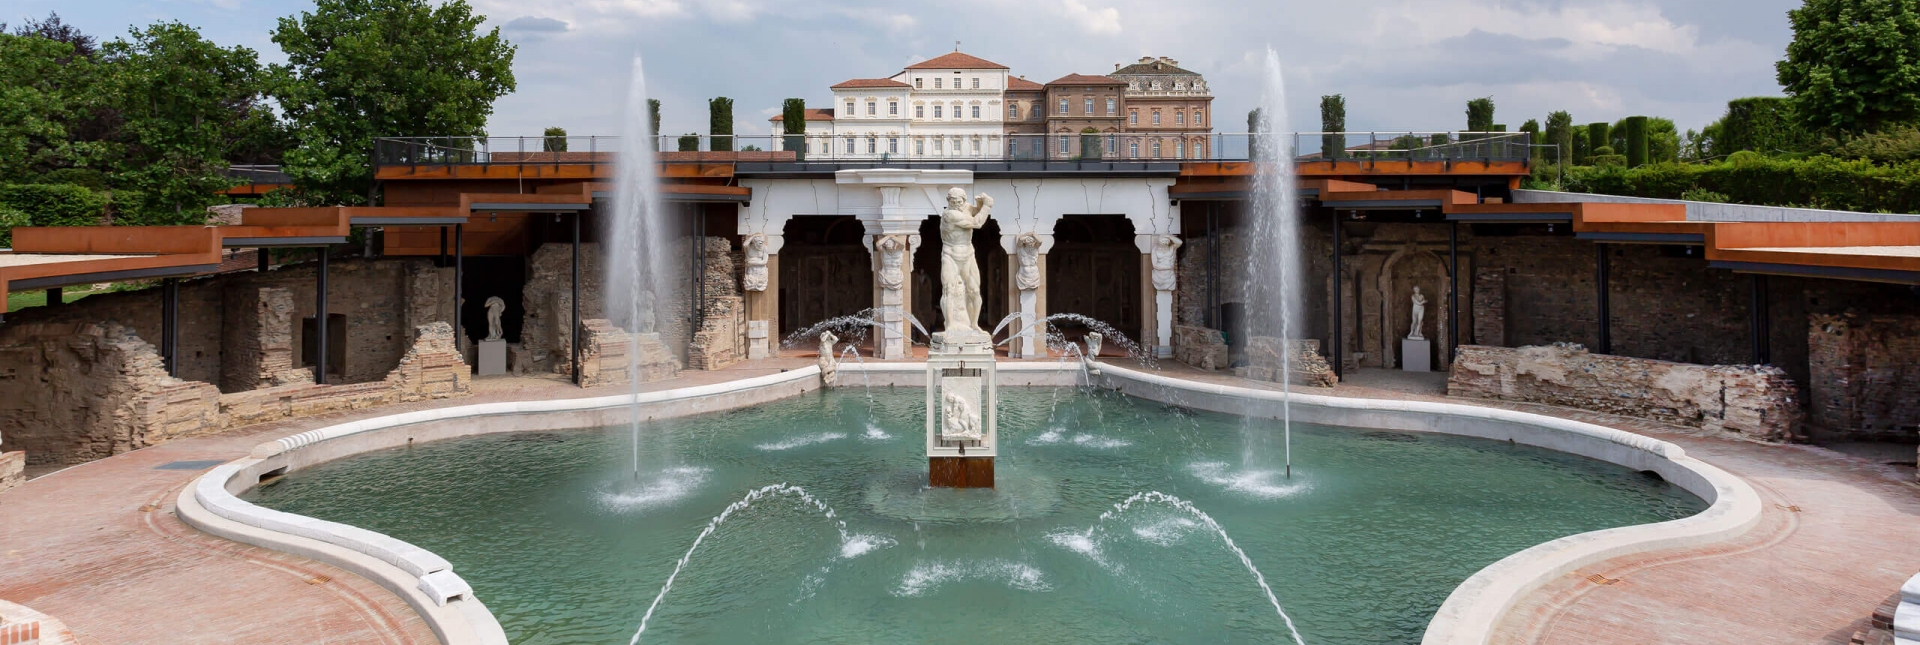 The Fountain of Hercules - Ph. Paolo Rubino